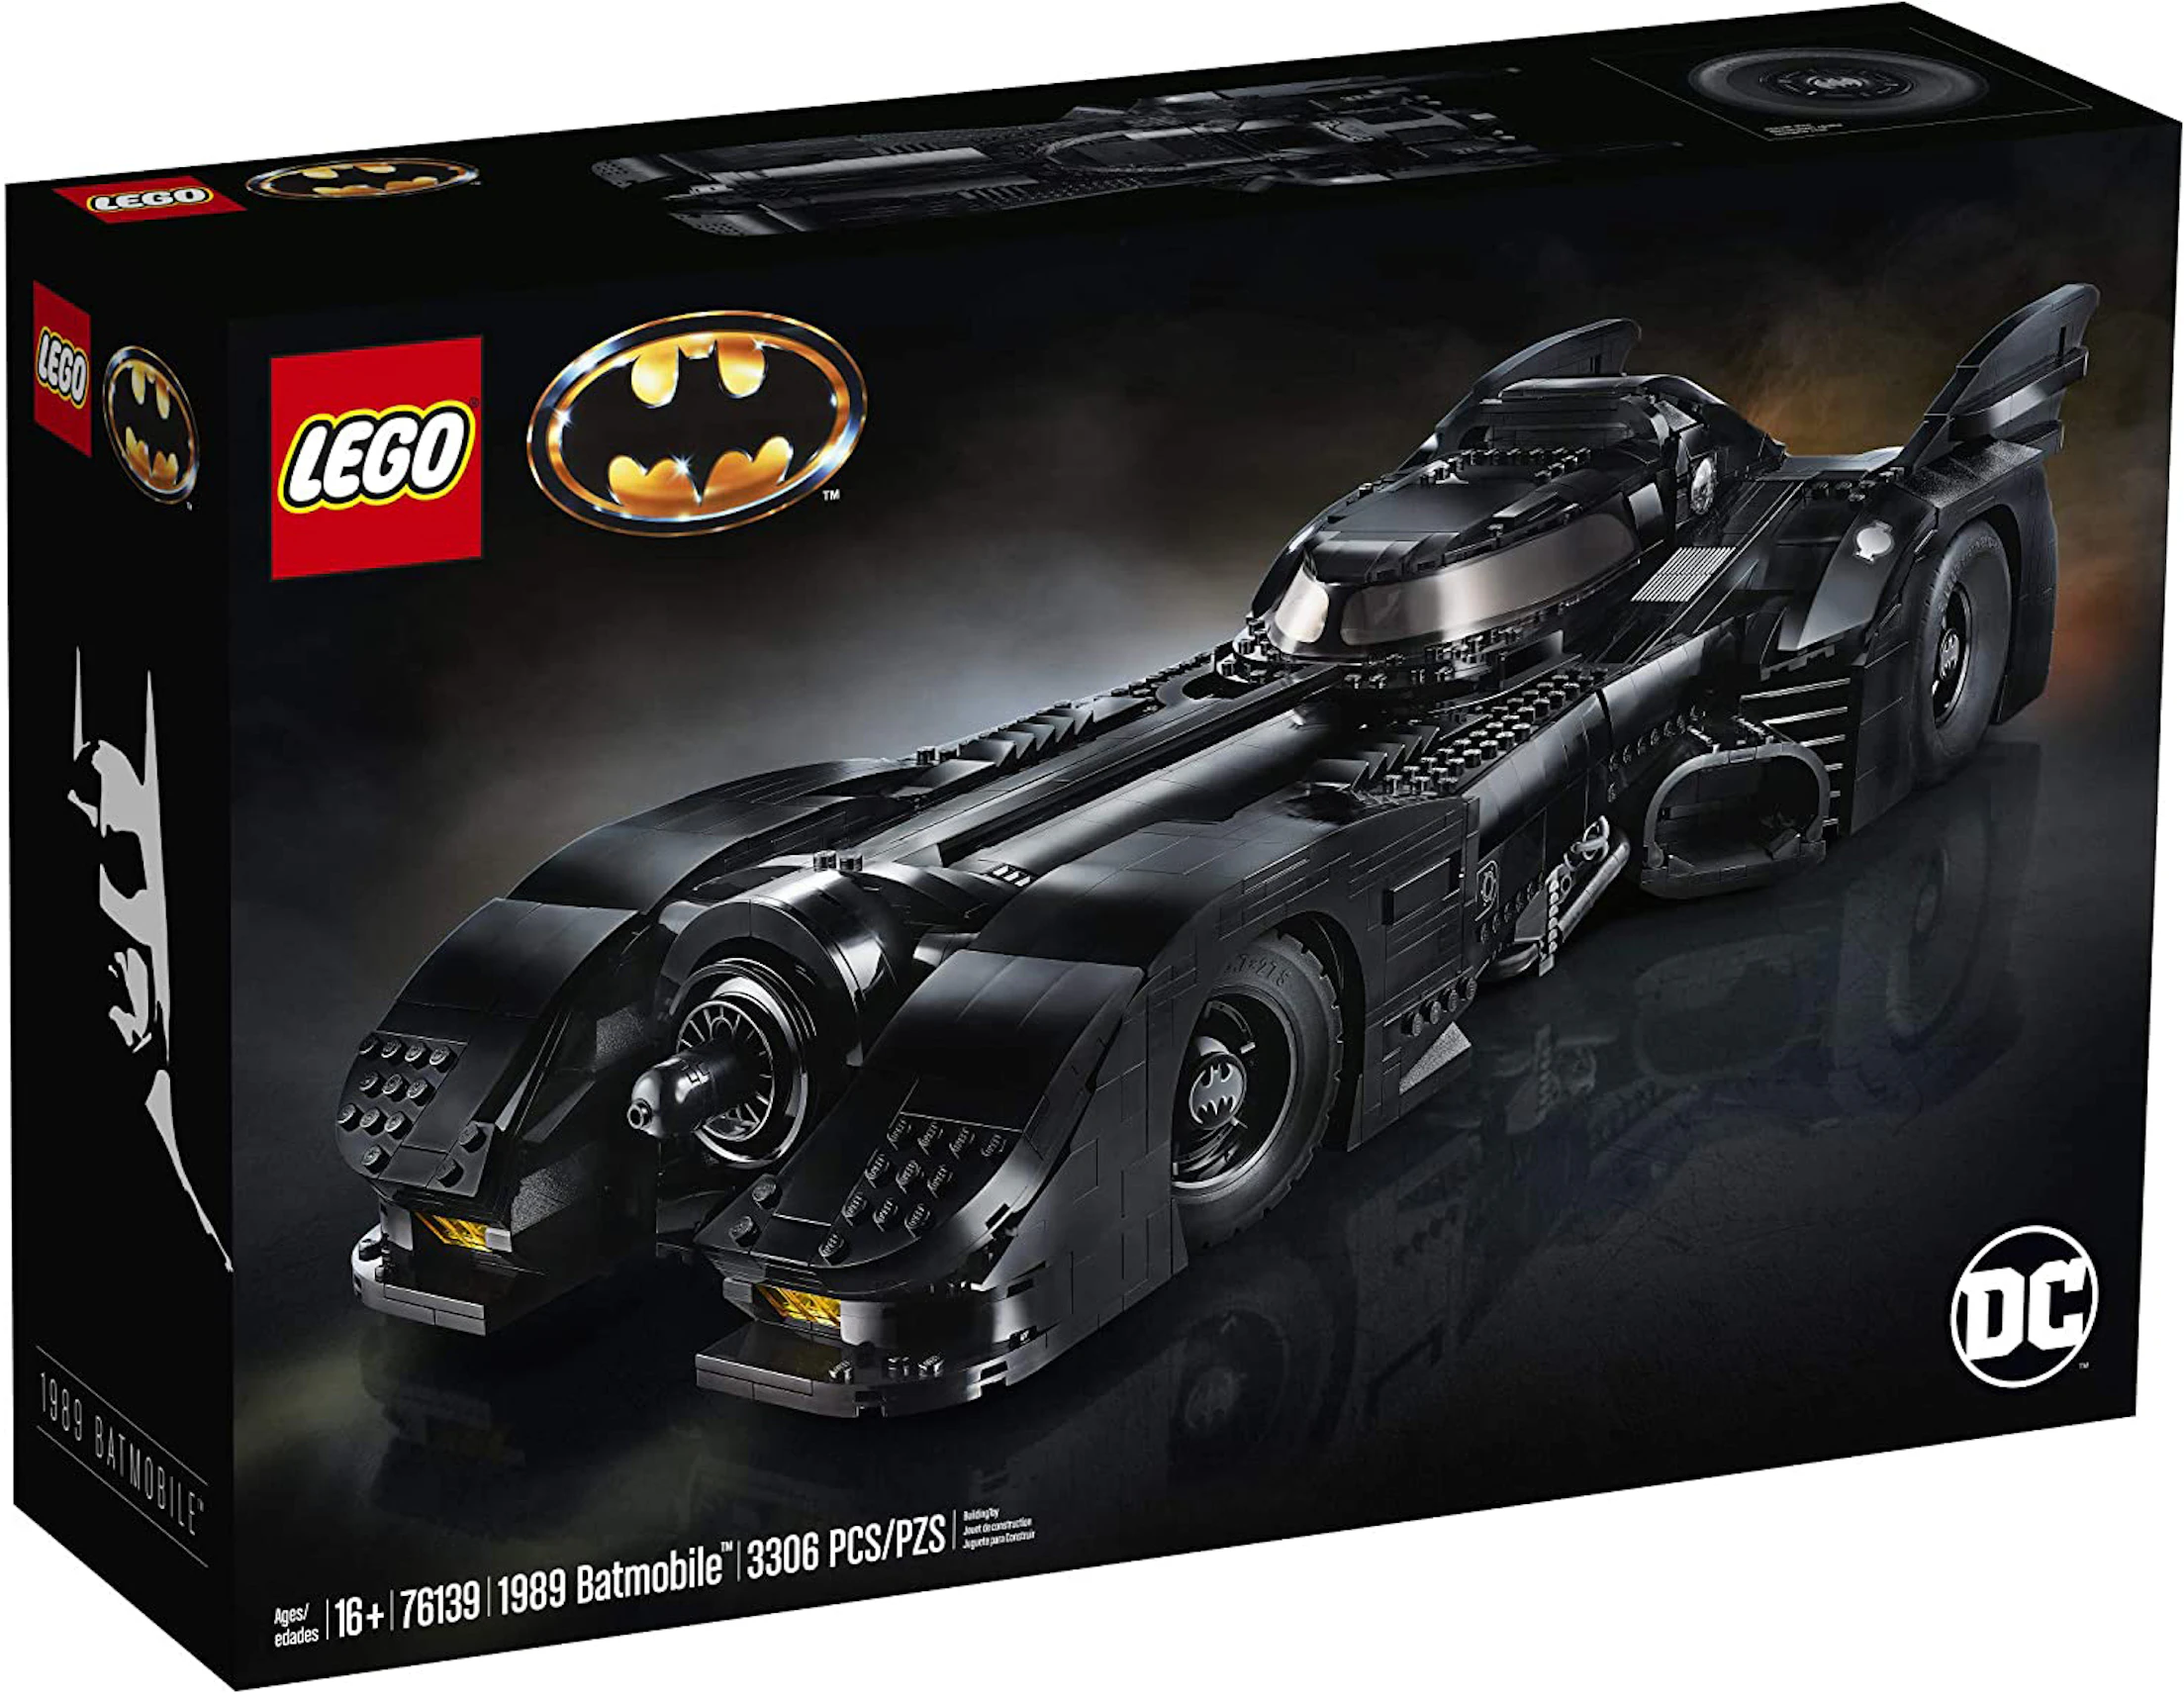 LEGO DC Batman 1989 Batmobile Set 76139 - US